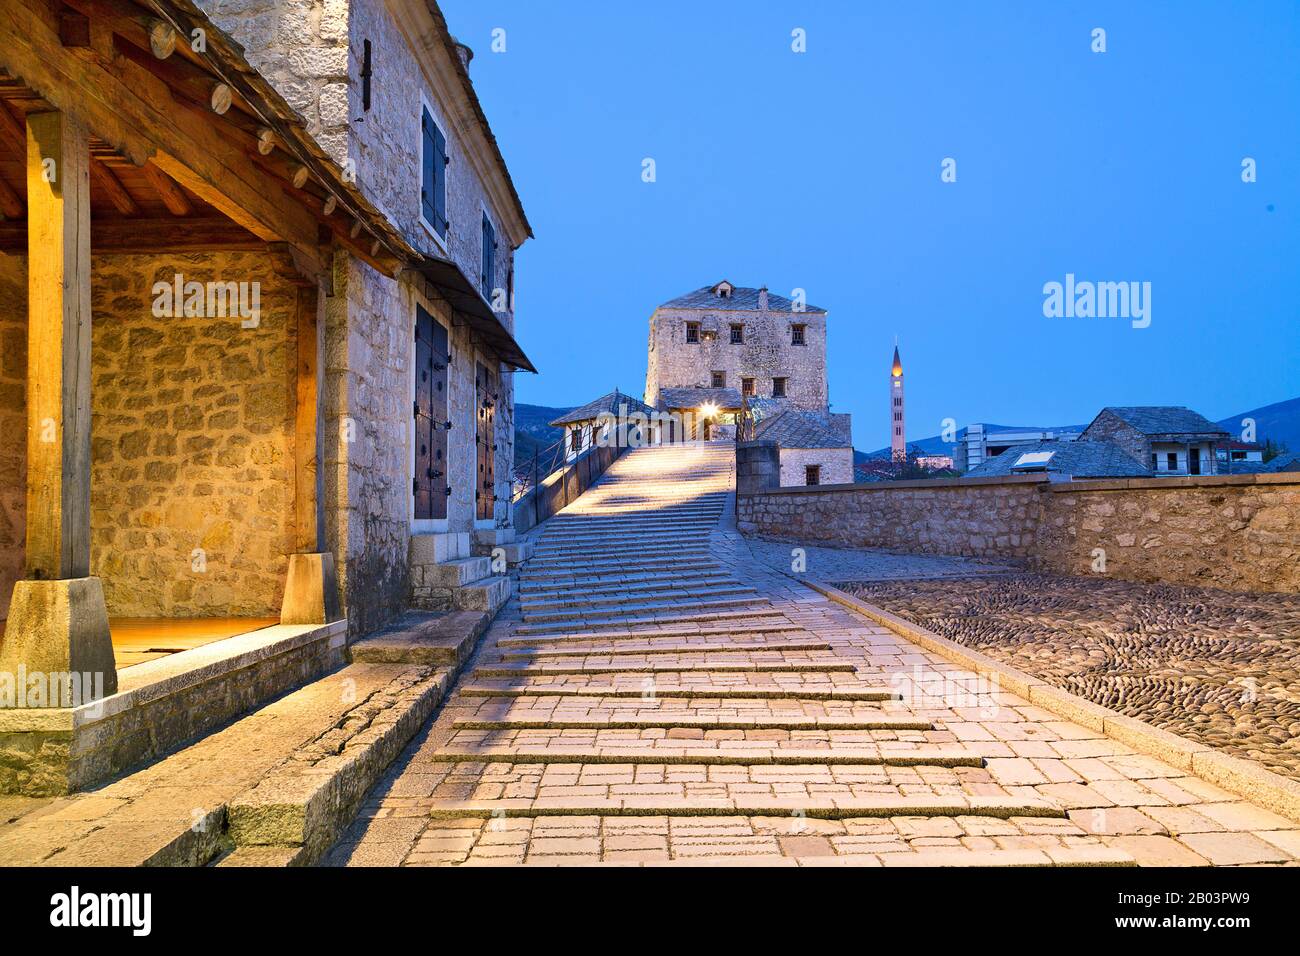 Edifici storici e strada acciottolata, all'alba, a Mostar, Bosnia-Erzegovina Foto Stock